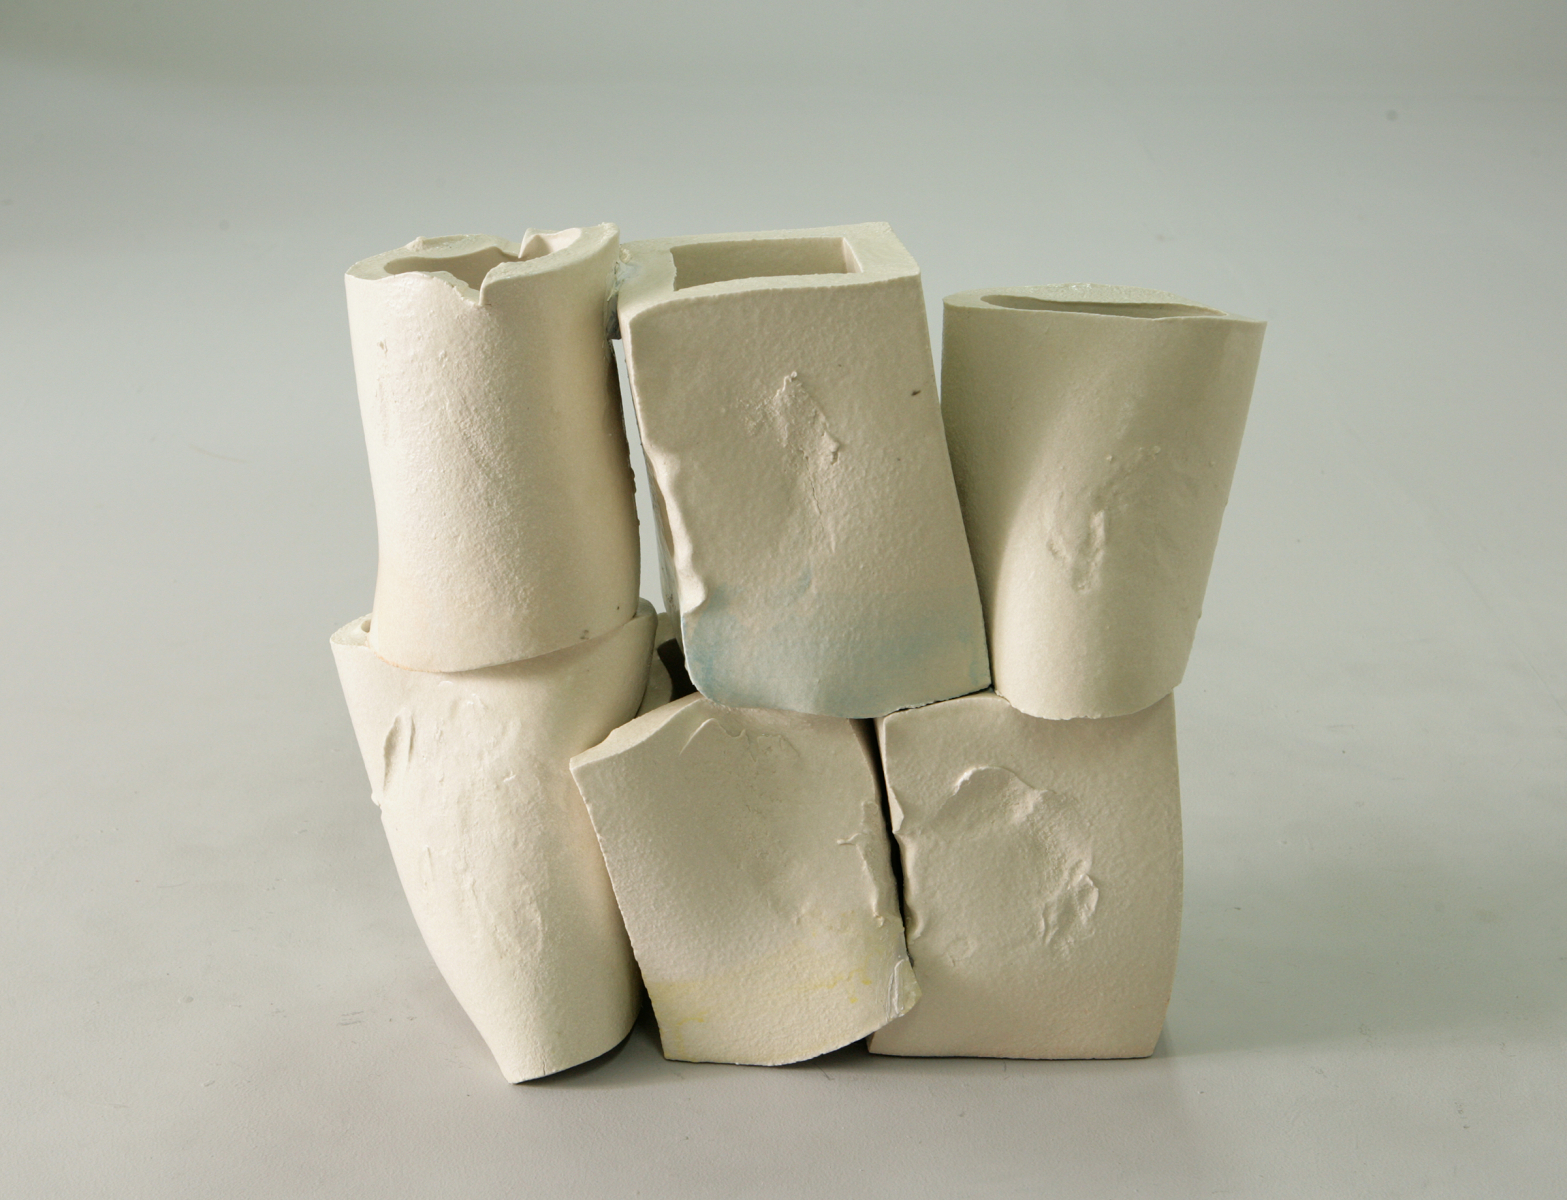 Becoming-13156, 2013, Ceramic, 47.5x21x56cm
